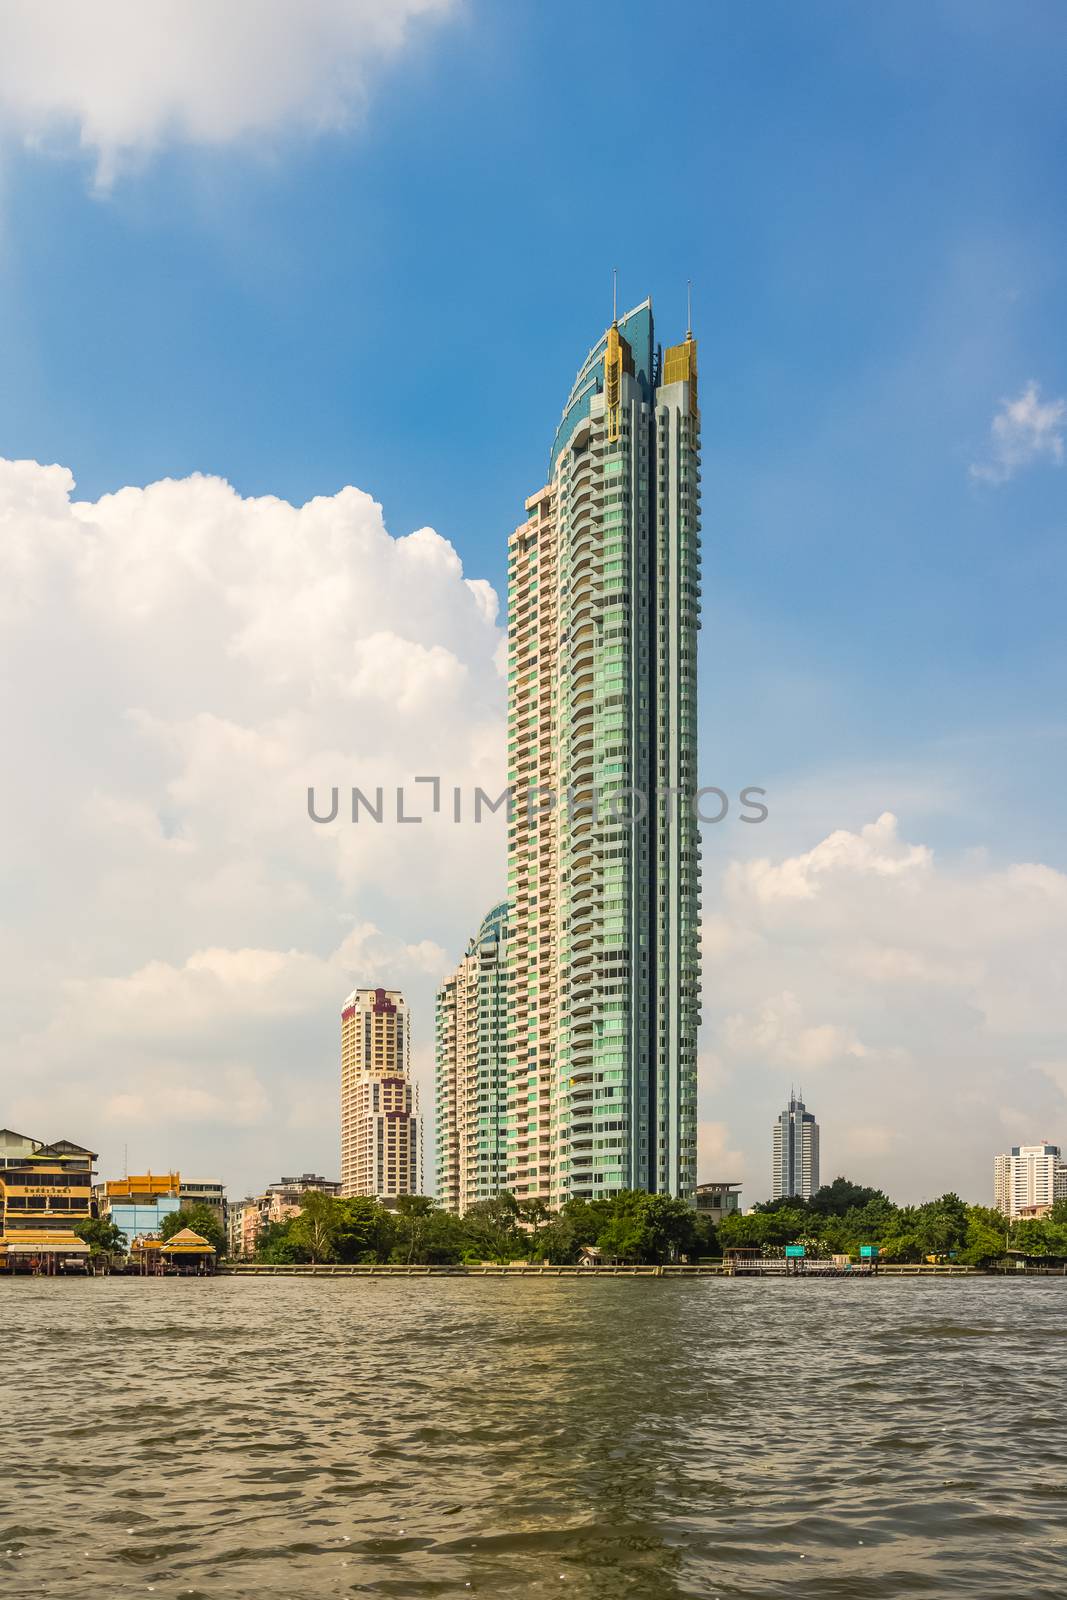 Watermark Chaophraya River condominium. Modern residential complex, a new landmark of Bangkok on the most splendid curve of the Chaophraya River.